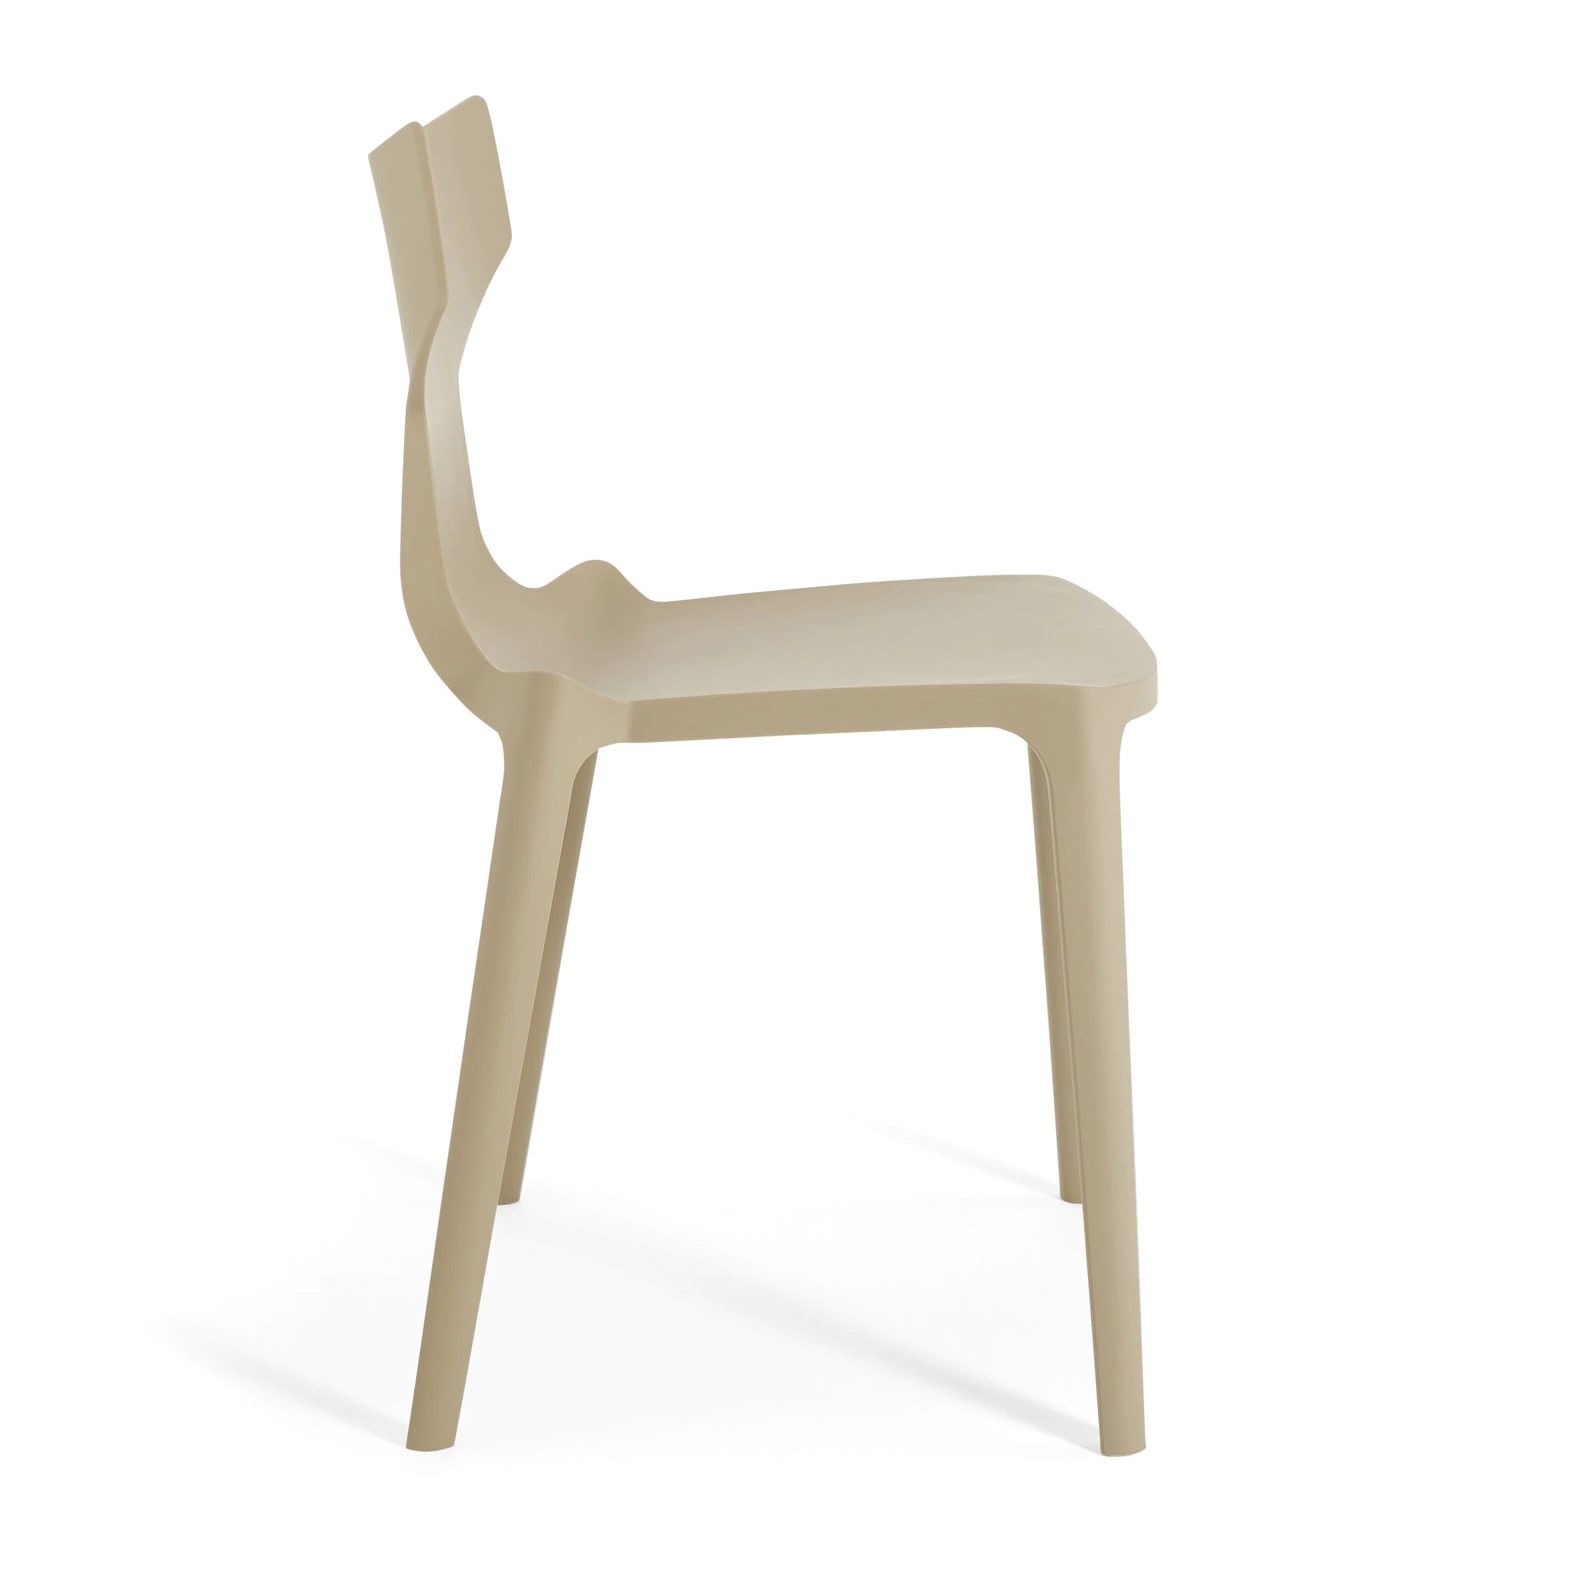 RE-CHAIR καρέκλα - συσκευασία 2 τεμαχίων Image 1++